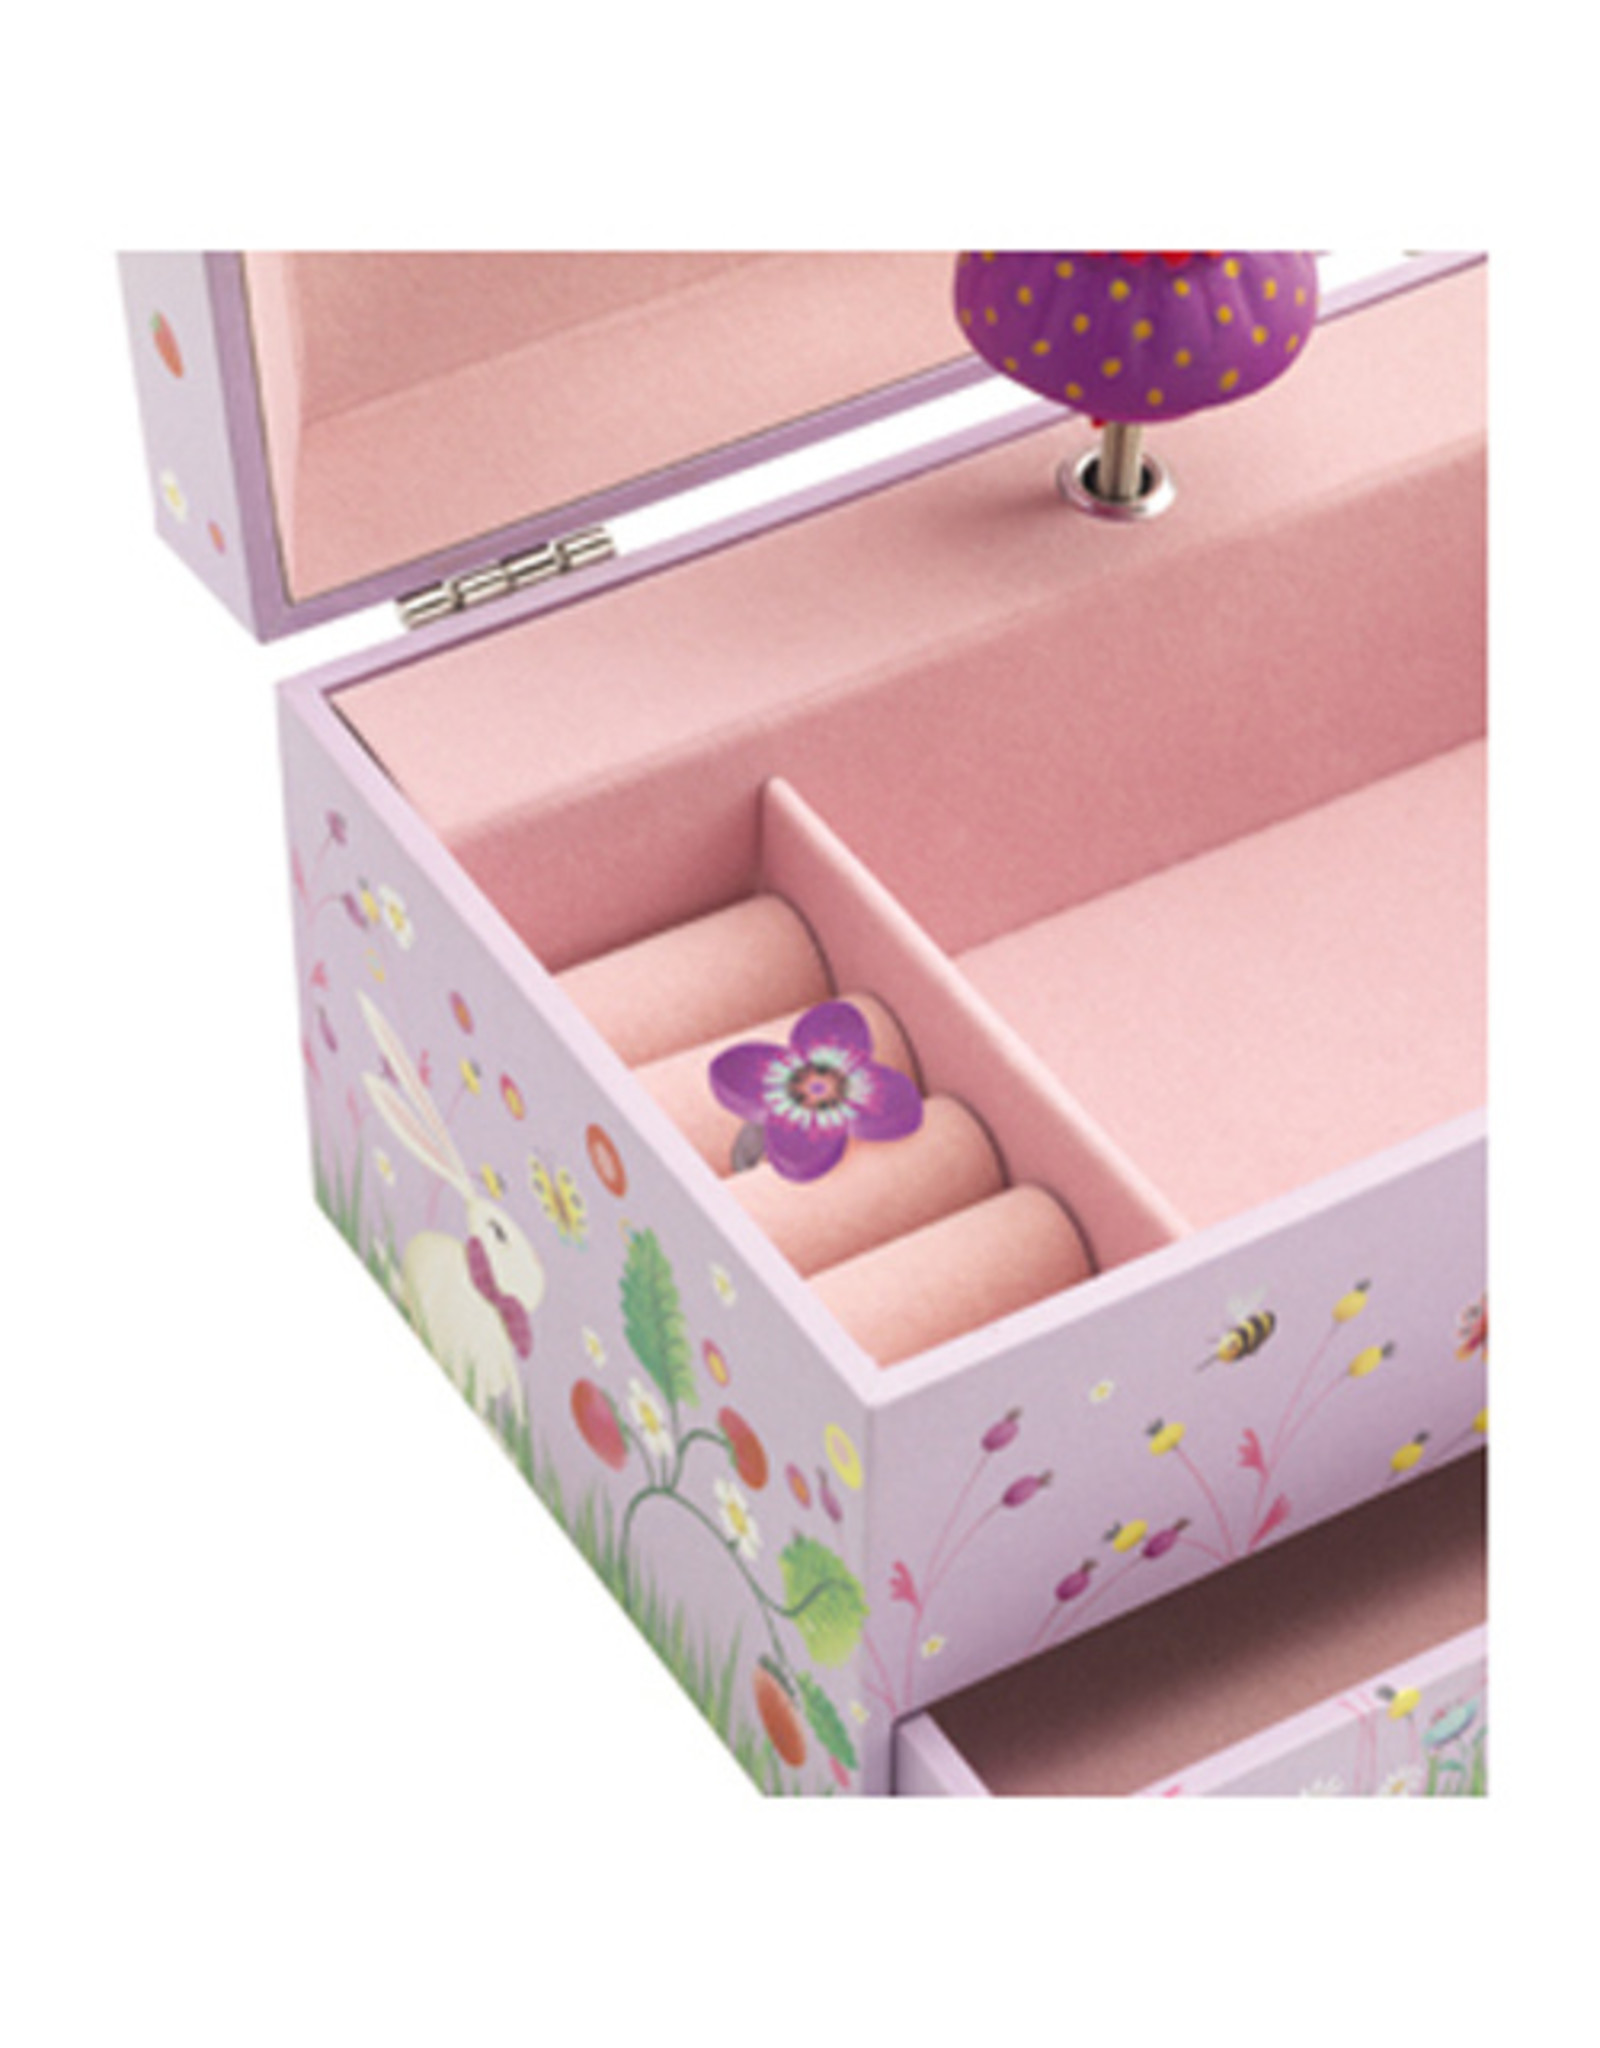 Djeco  Princess’s Melody Musical Jewellery Box 